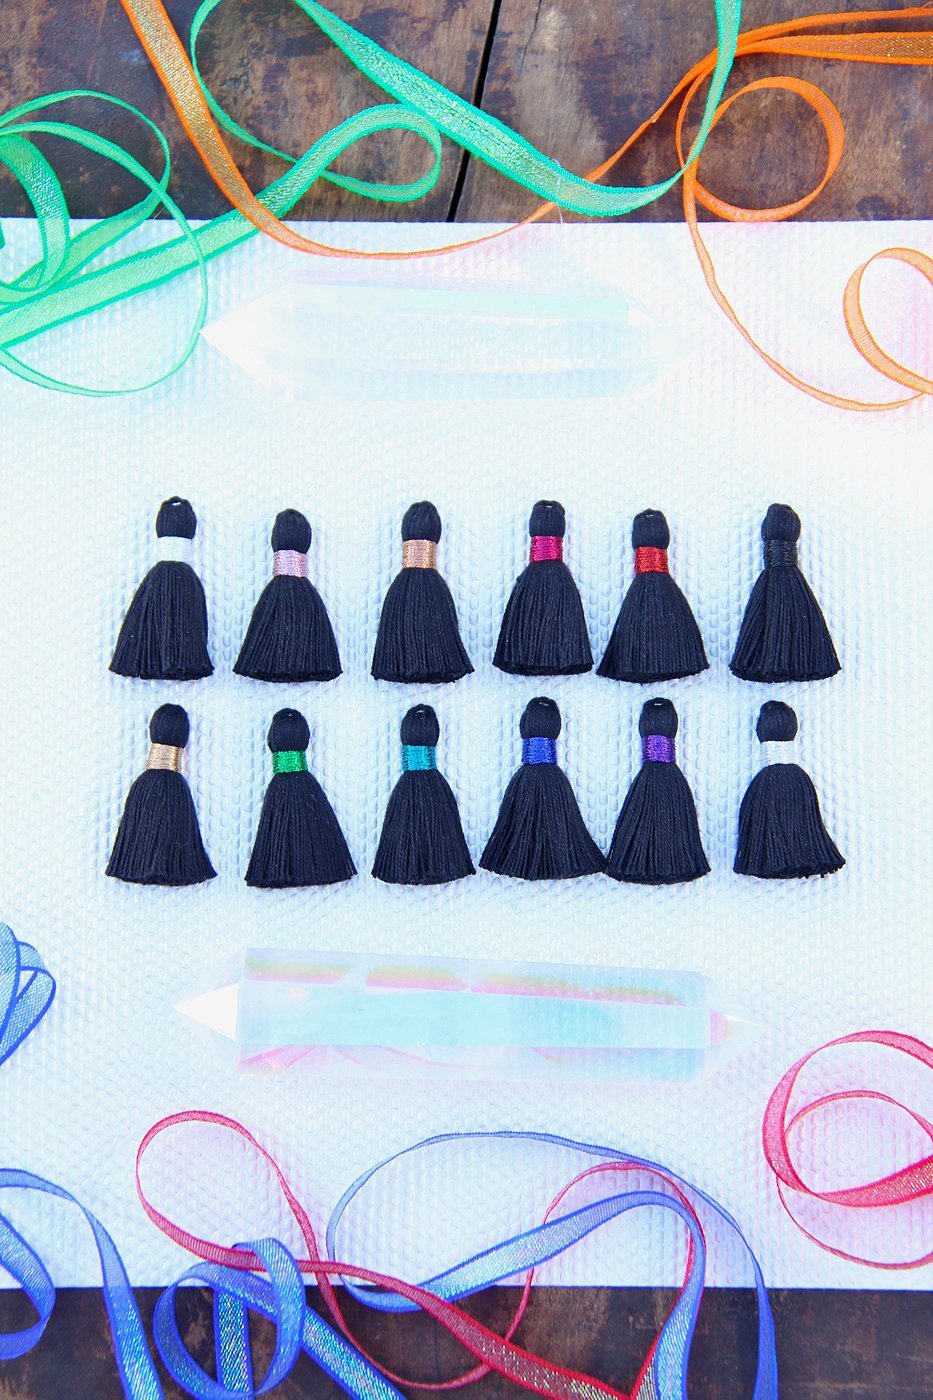 Mini Black Cotton Tassels, Metallic Binding, 1.25" DIY Jewelry Making Supplies, Boho Fringe Pendant